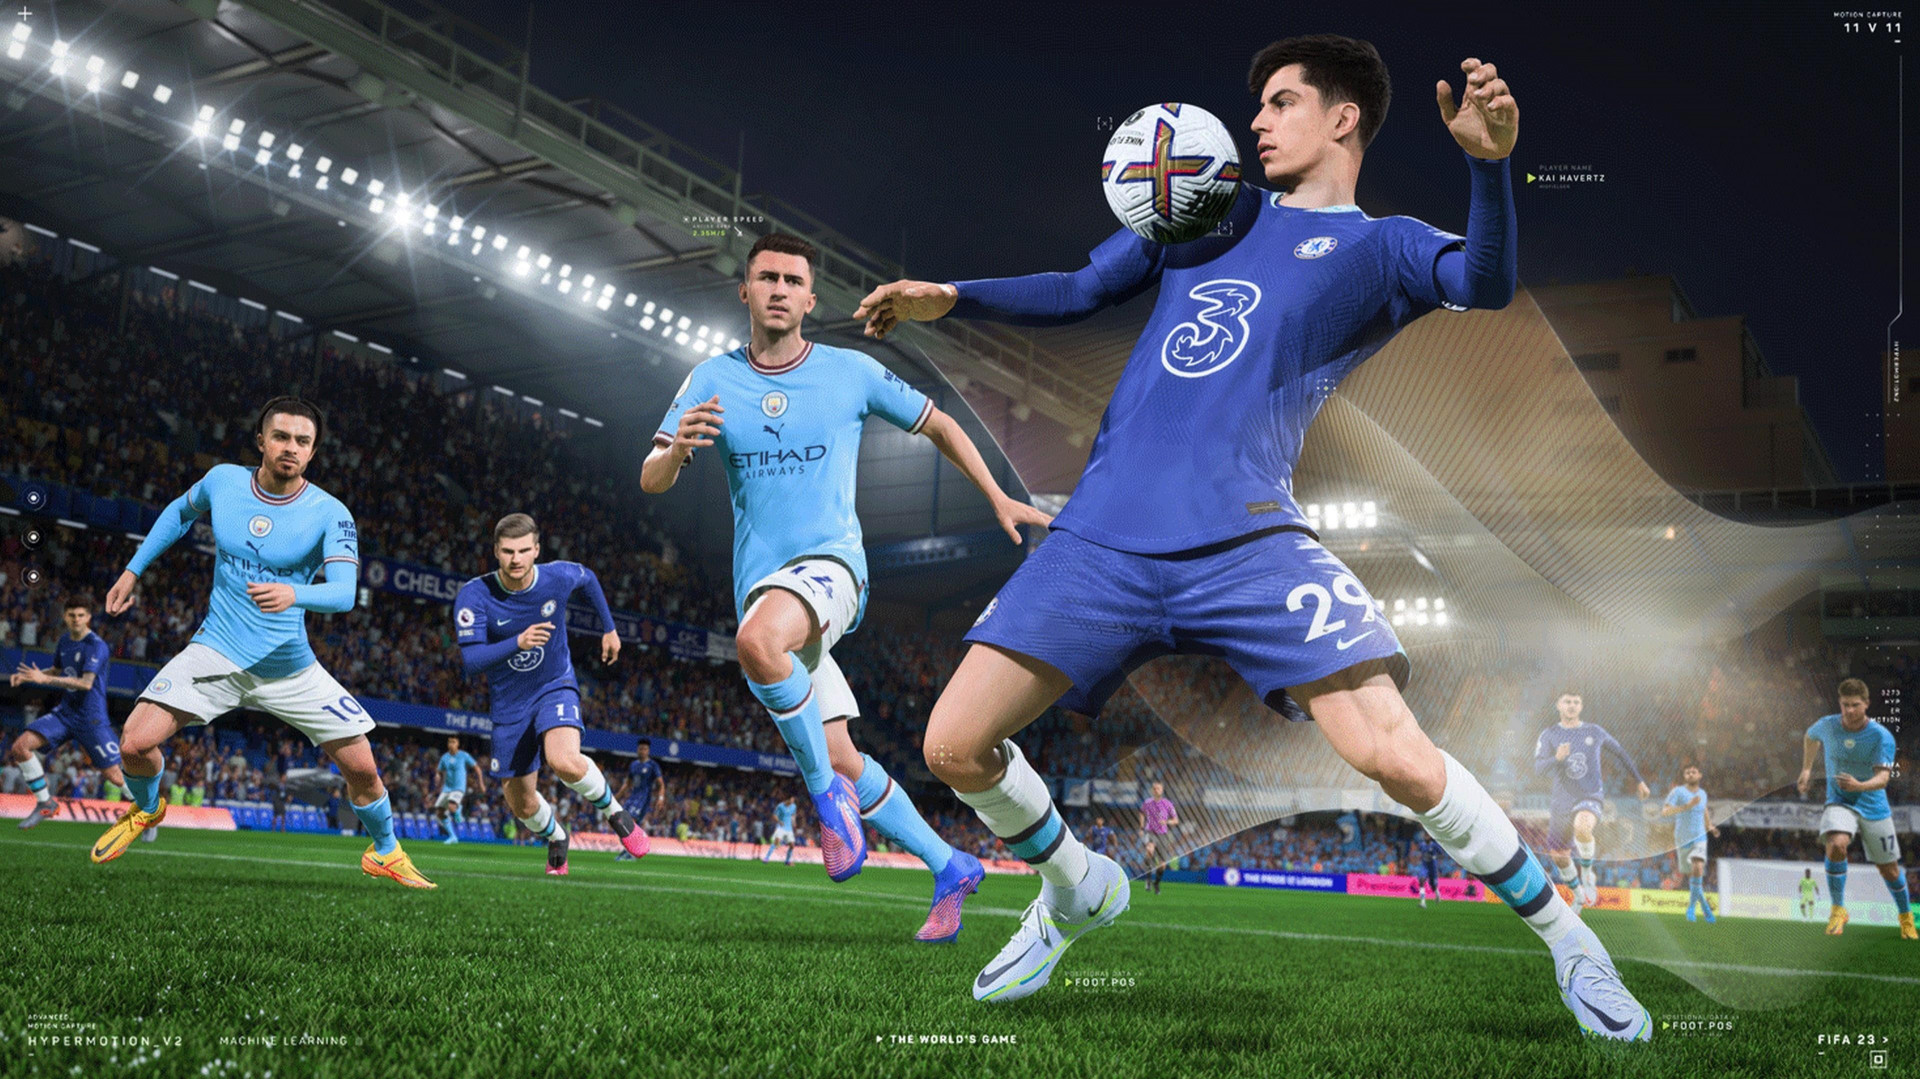 Comprar FIFA 23 Ultimate Edition (Xbox ONE / Xbox Series X